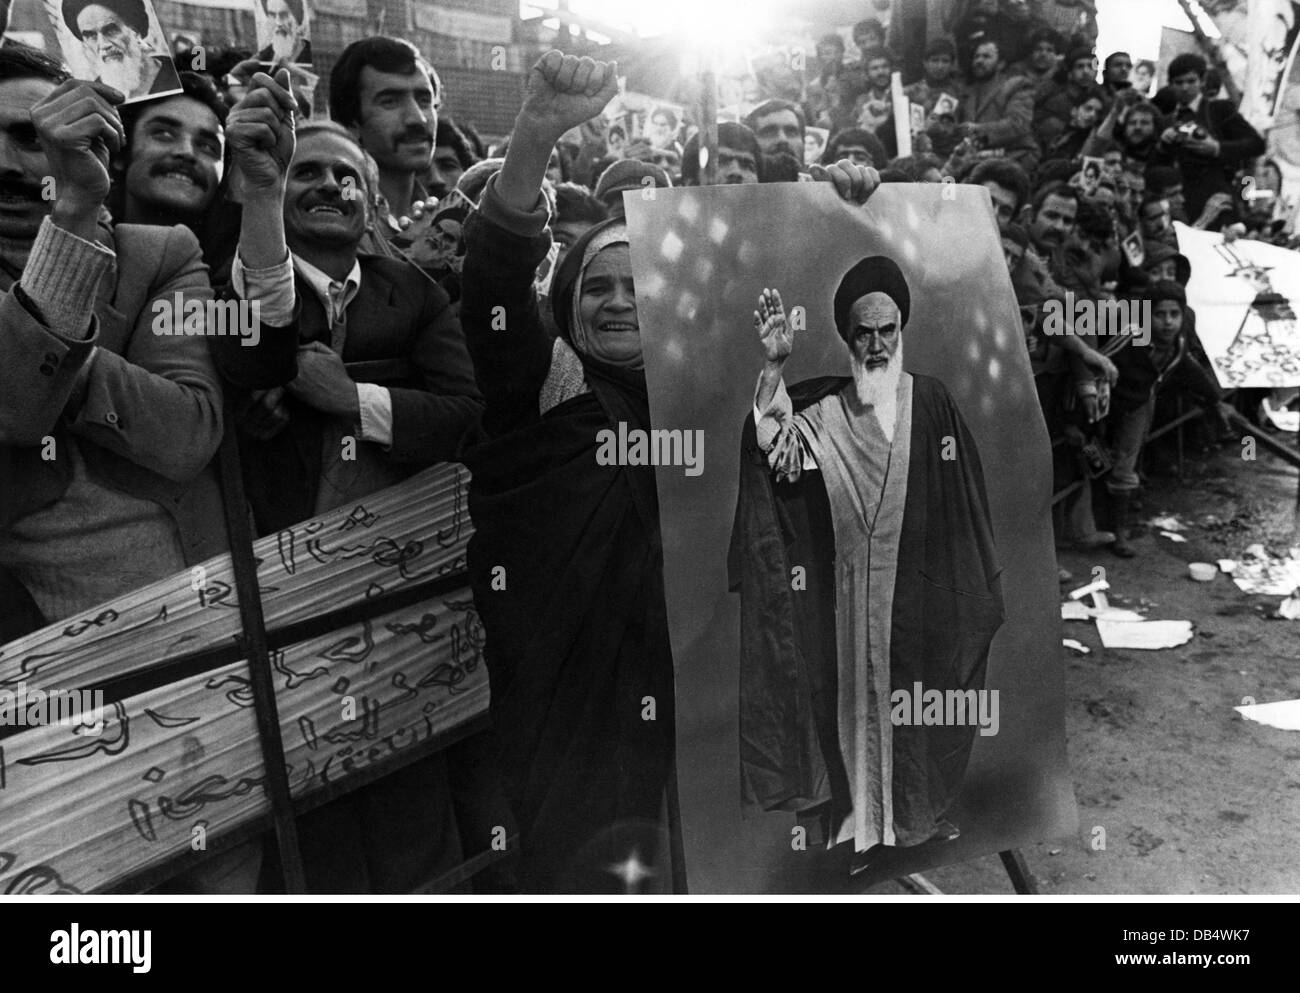 Politik, Demonstrationen, Anhänger von ayatollah Ruhollah Khomeini, Iran, um 1979, Zusatzrechte-Clearences-nicht verfügbar Stockfoto